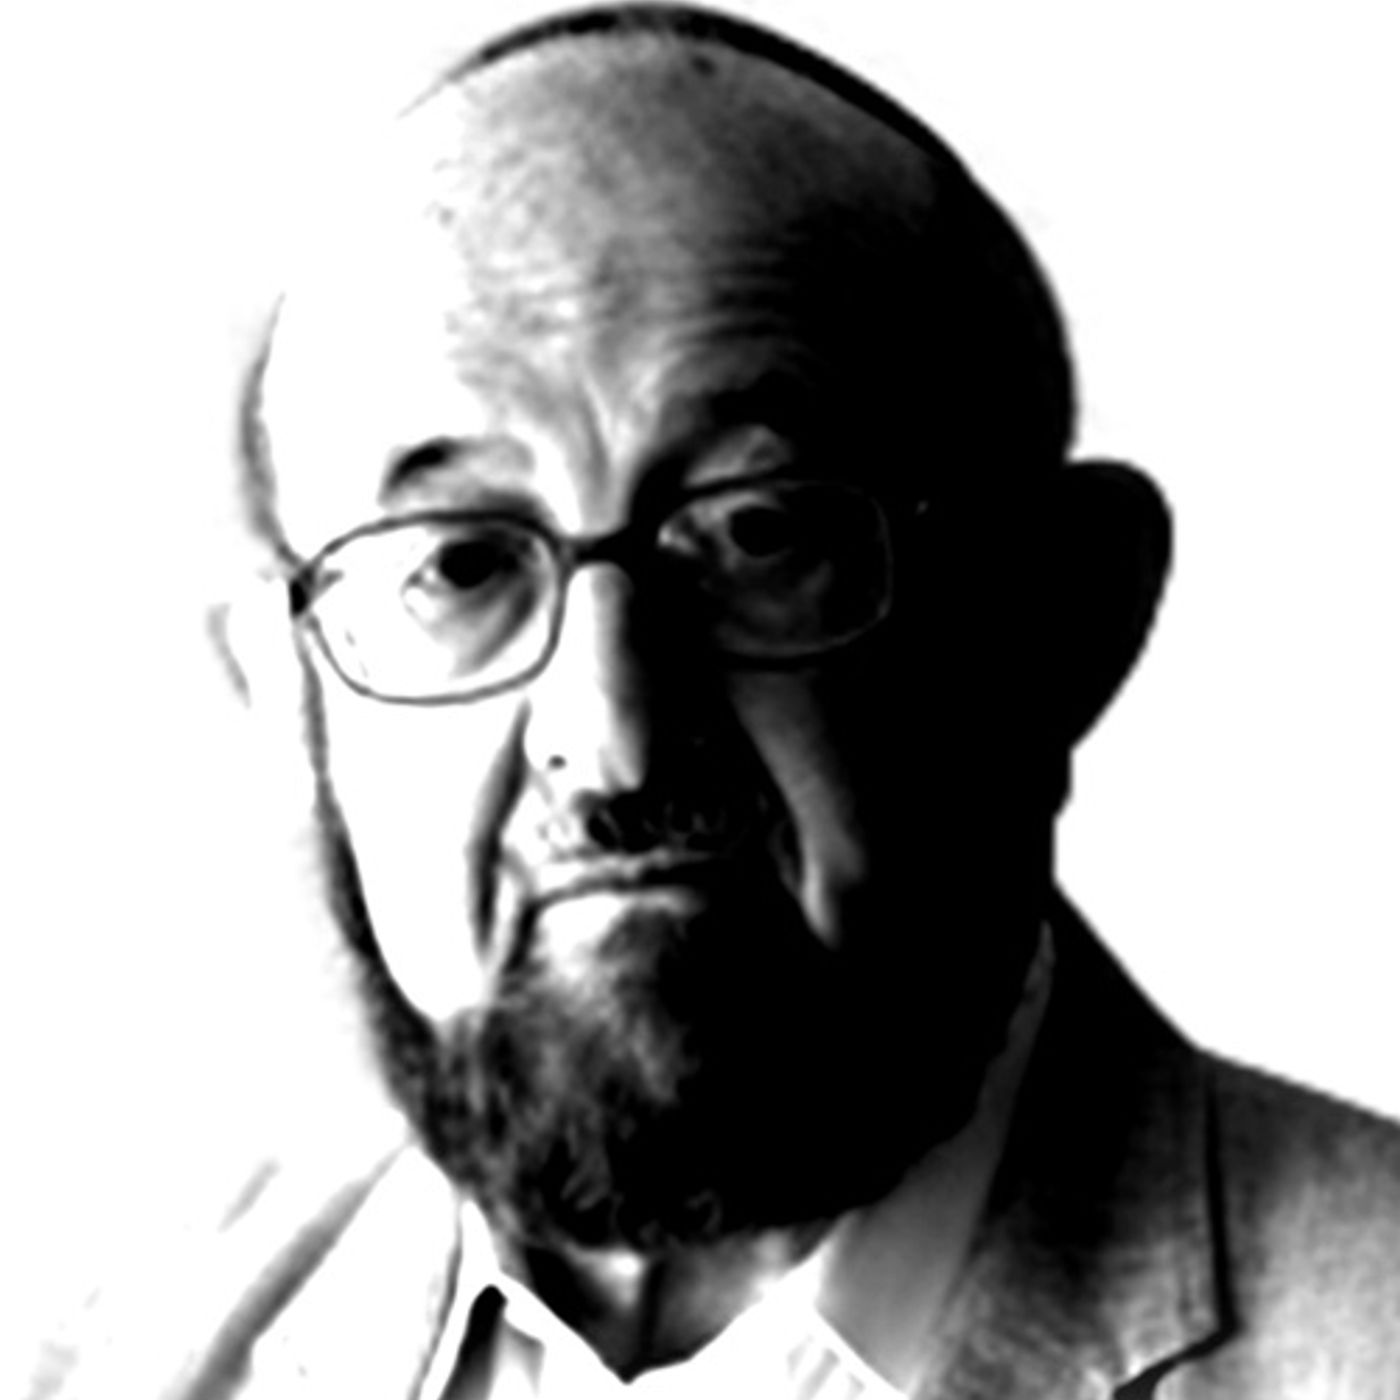 Rabbi Dr. Haym Soloveitchik: The Rupture and Reconstruction of Halacha [Halacha 1/4]